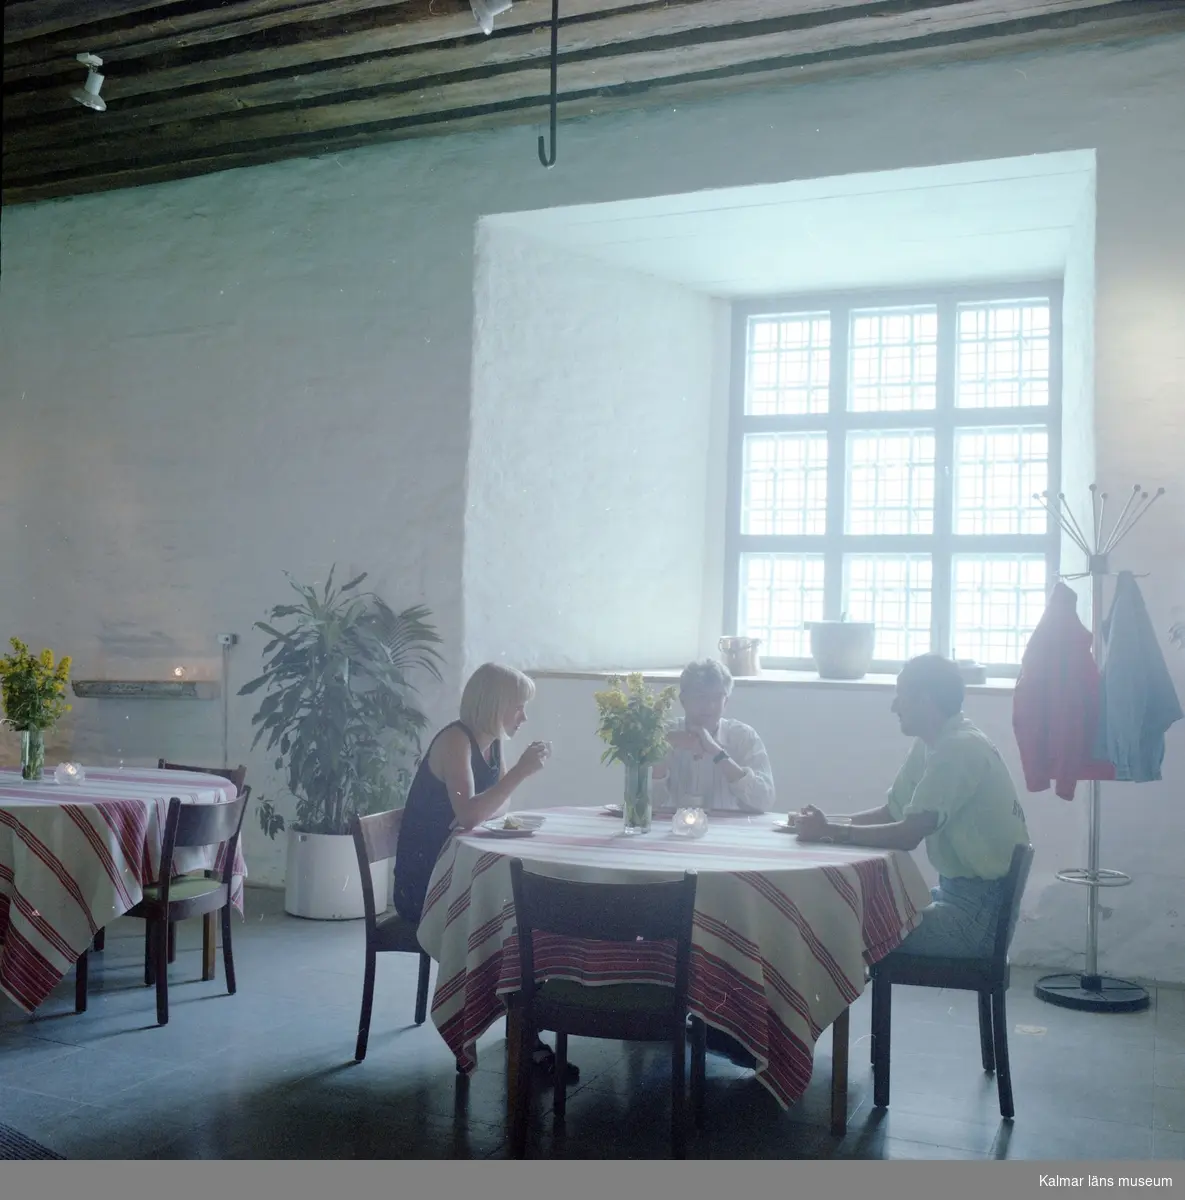 Cafédelen av serveringen på Kalmar slott.